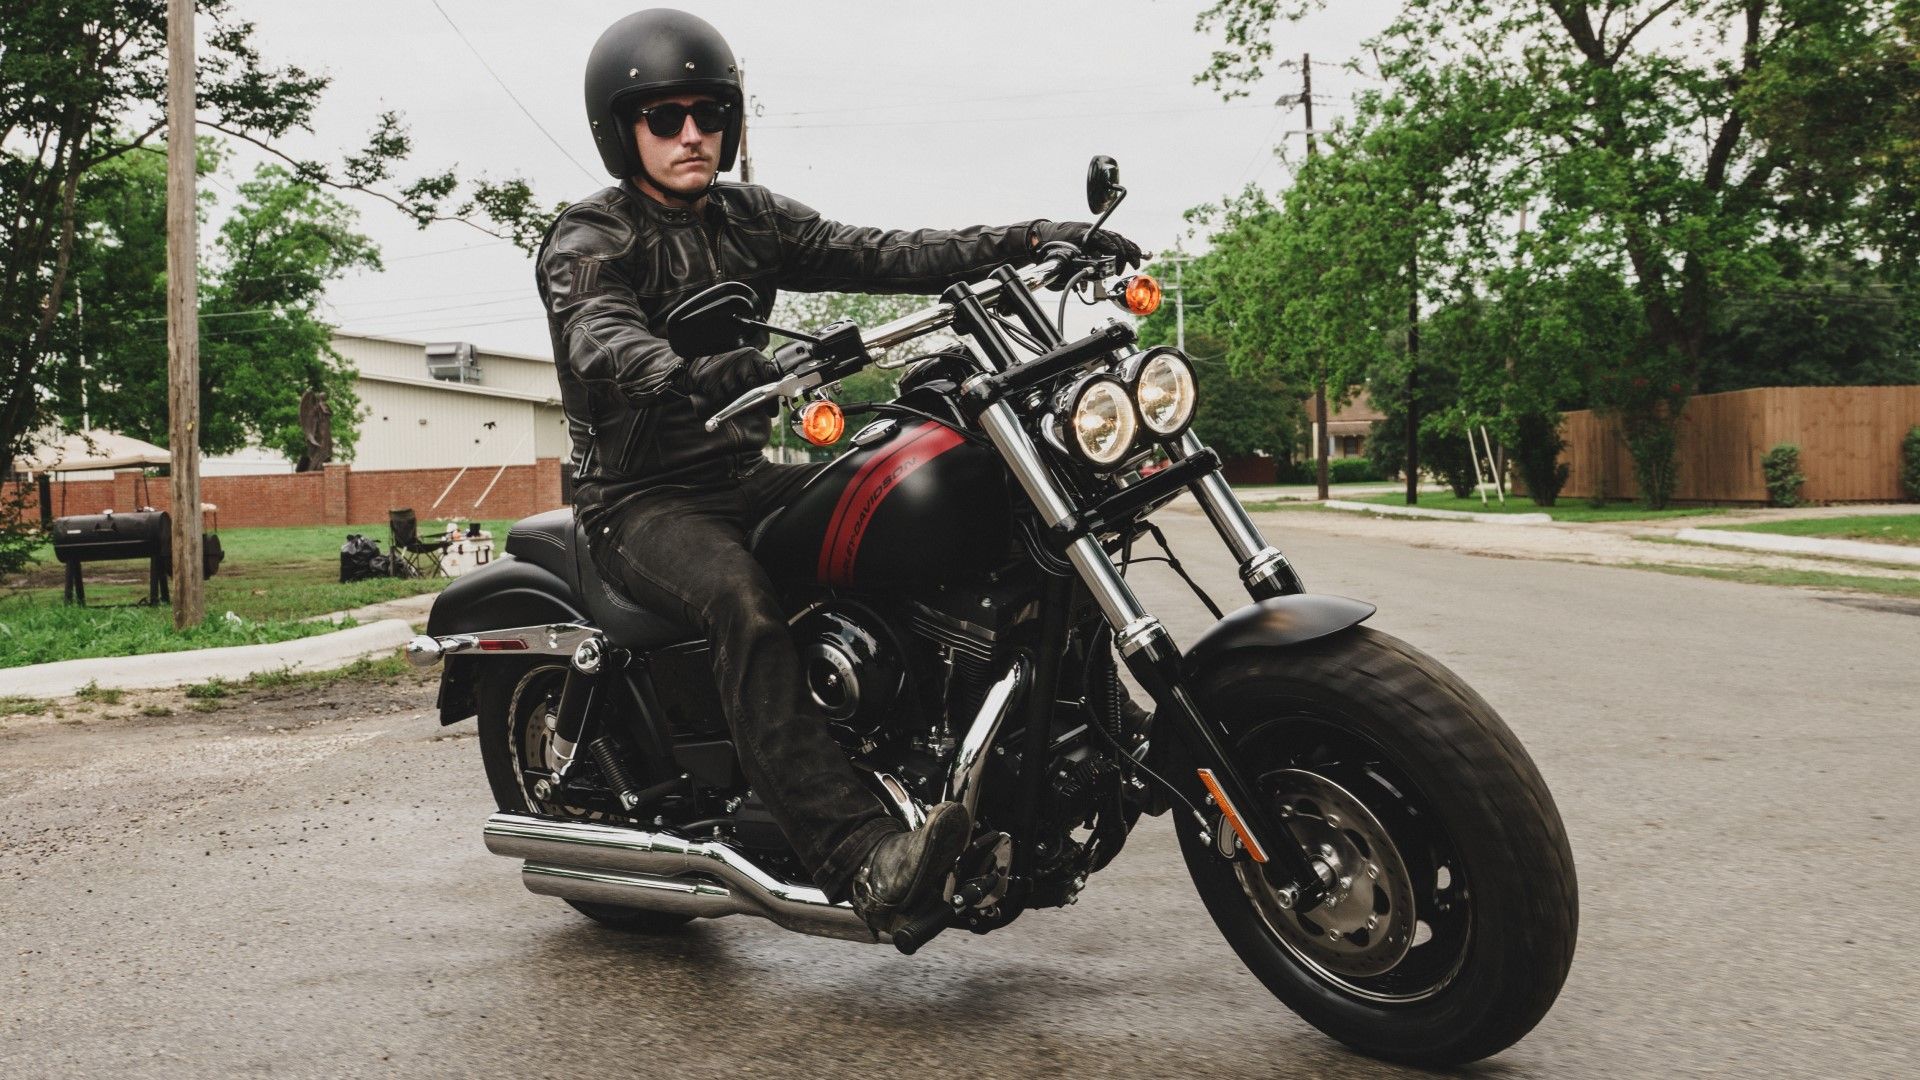 2014 Harley-Davidson Dyna Fat Bob cornering view